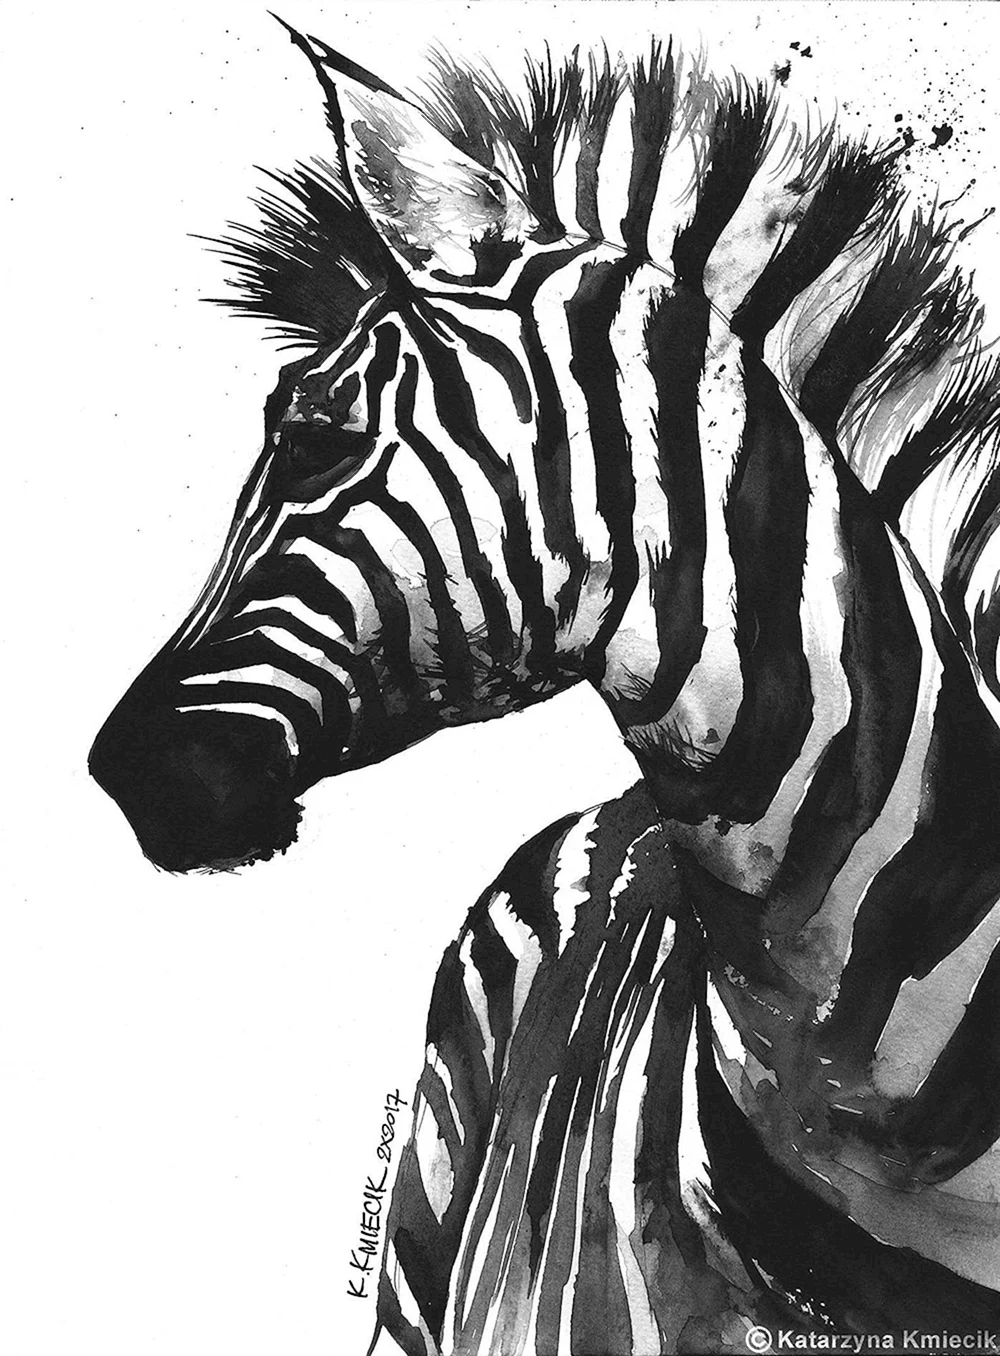 Zebra Art